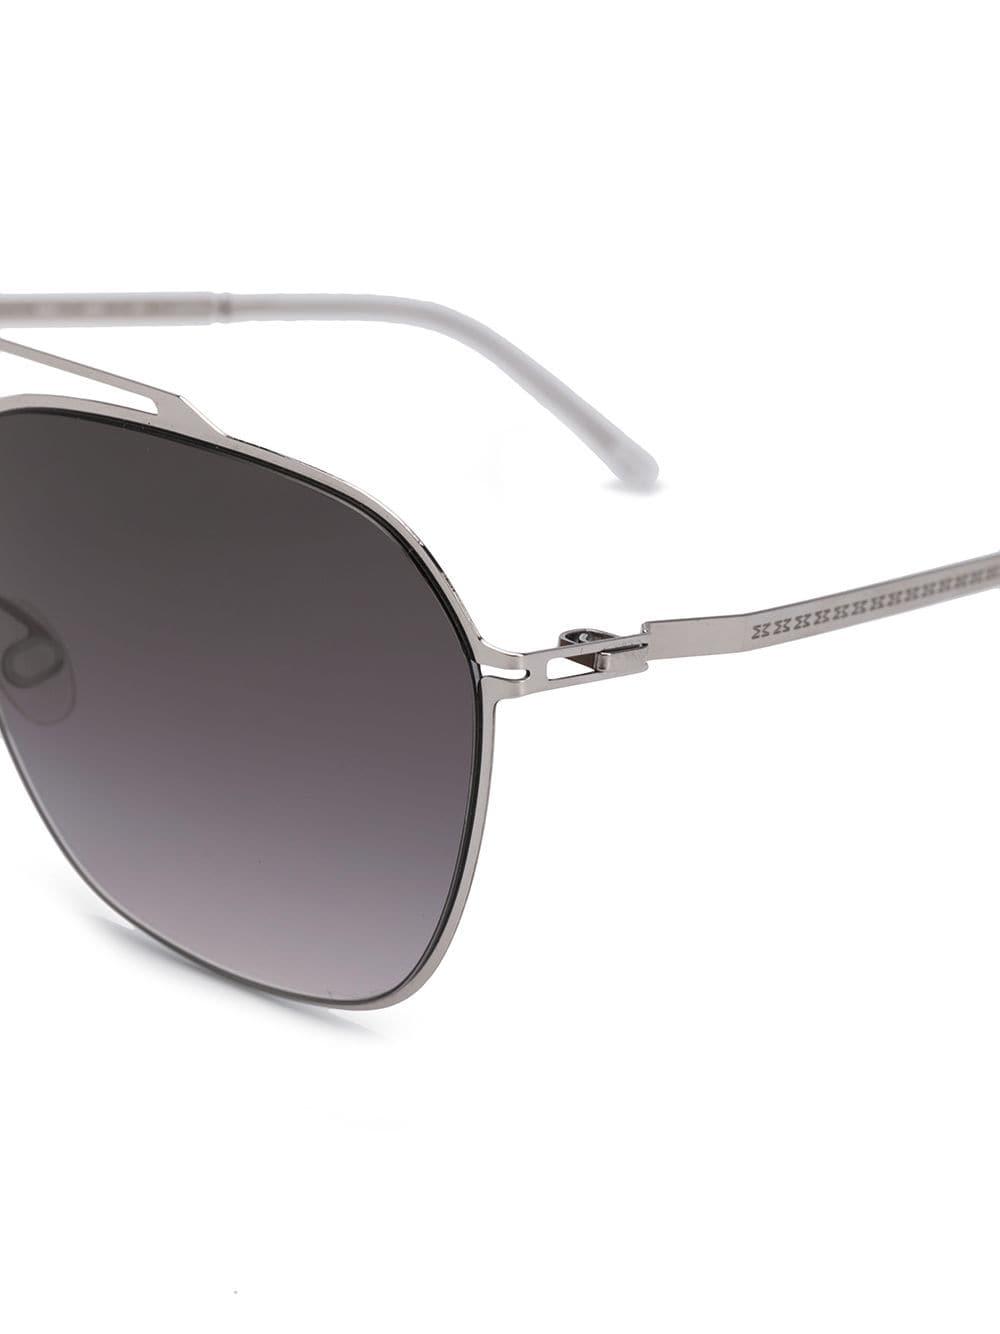 Mykita Aviator-shaped Sunglasses in Metallic for Men - Lyst